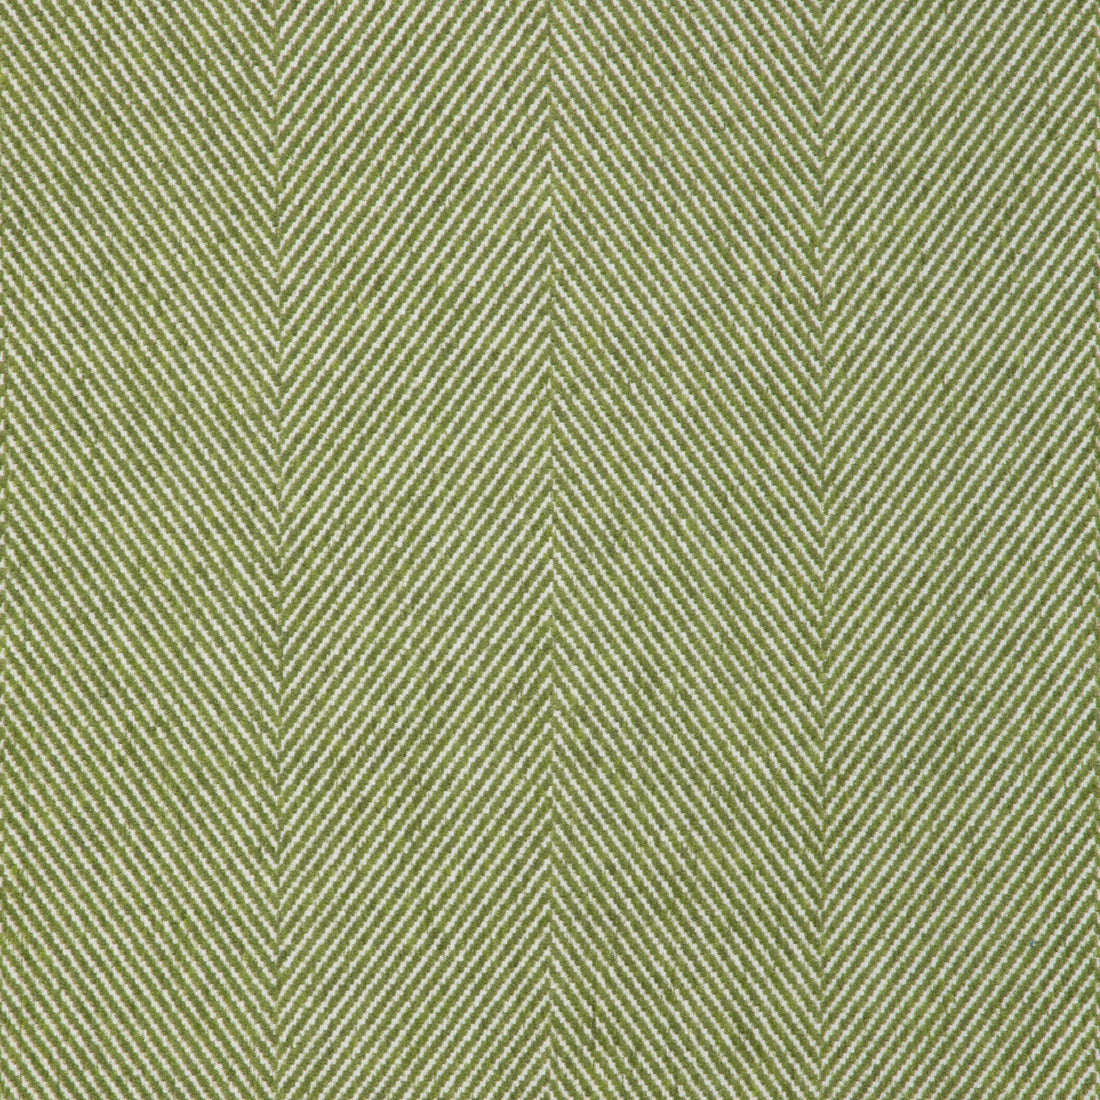 Kravet Design fabric in 36775-3 color - pattern 36775.3.0 - by Kravet Design in the Sea Island Indoor/Outdoor collection